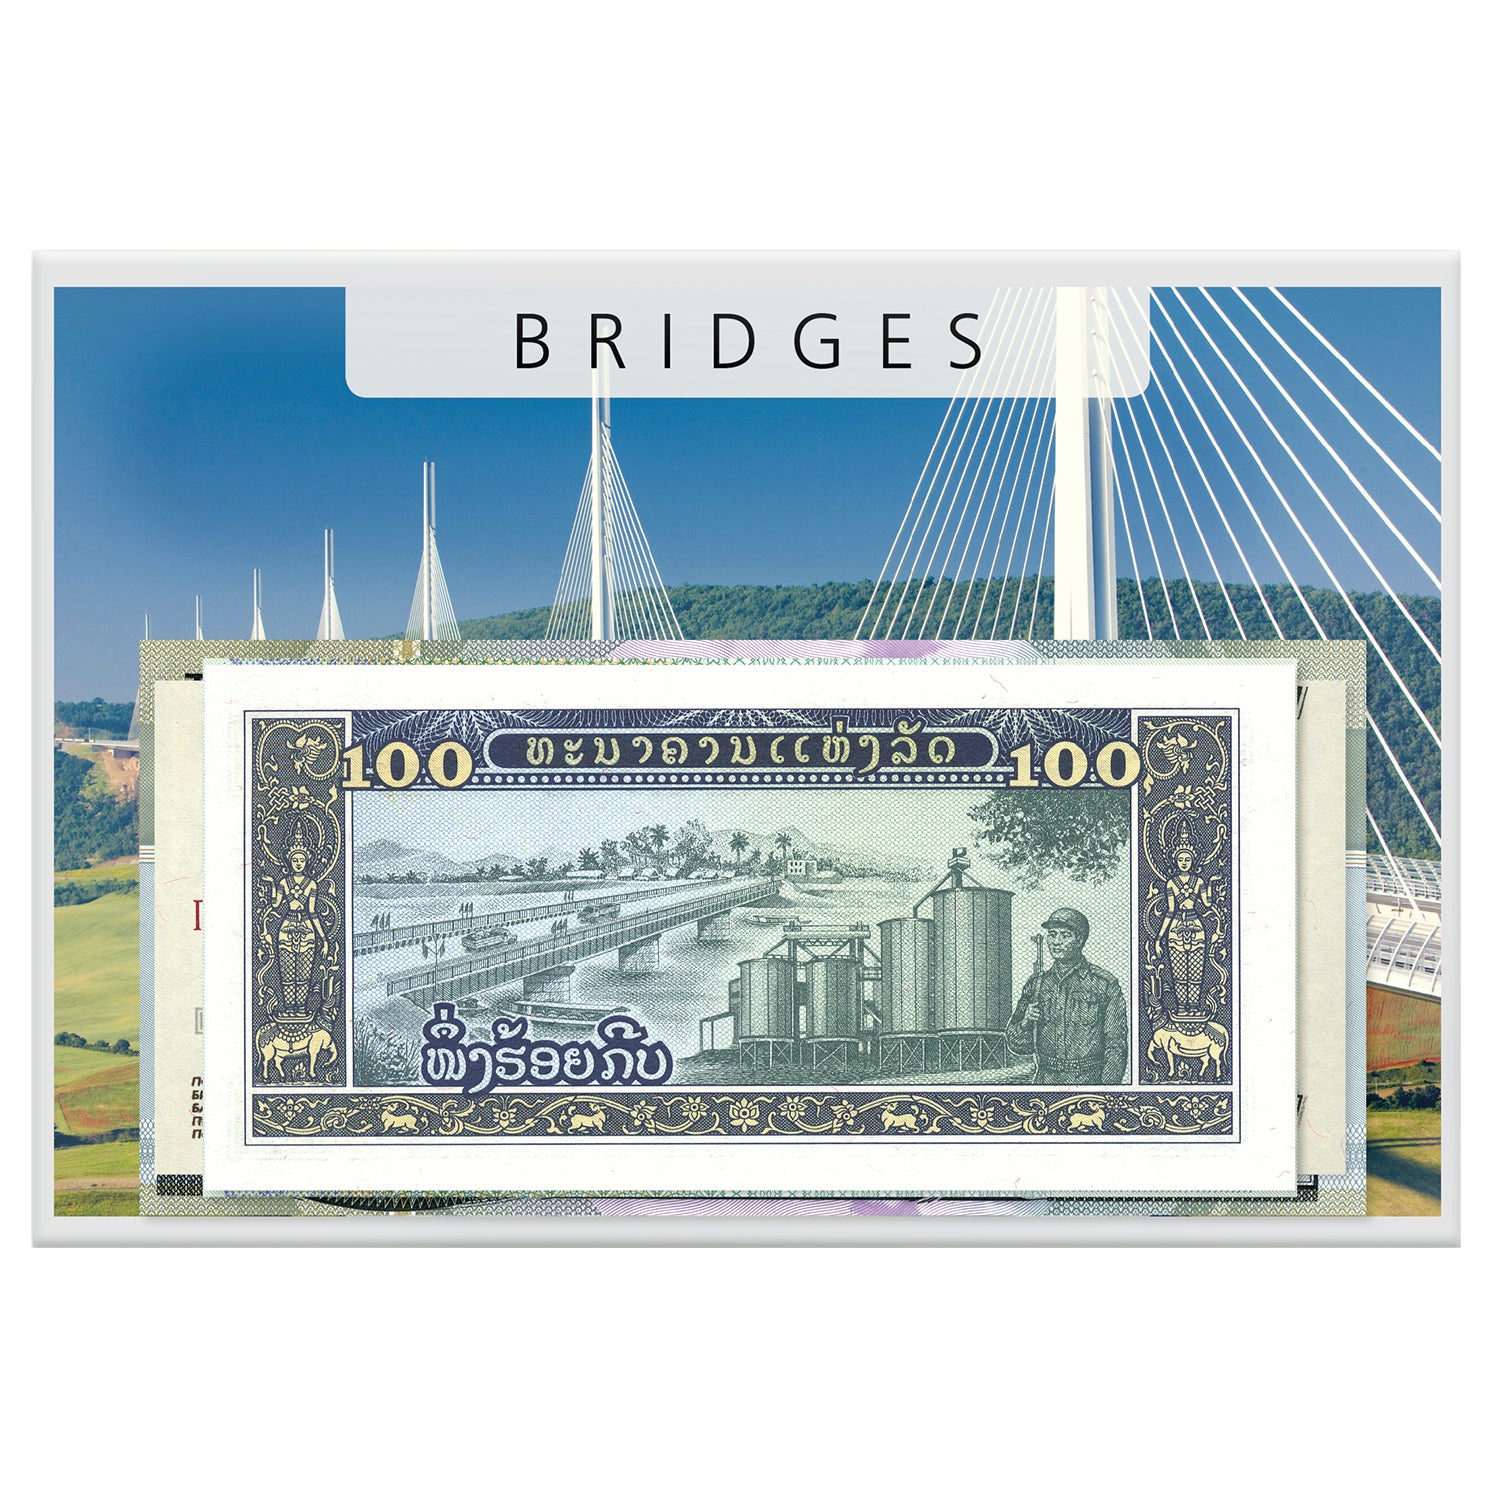 Banknote Collection "Bridges"